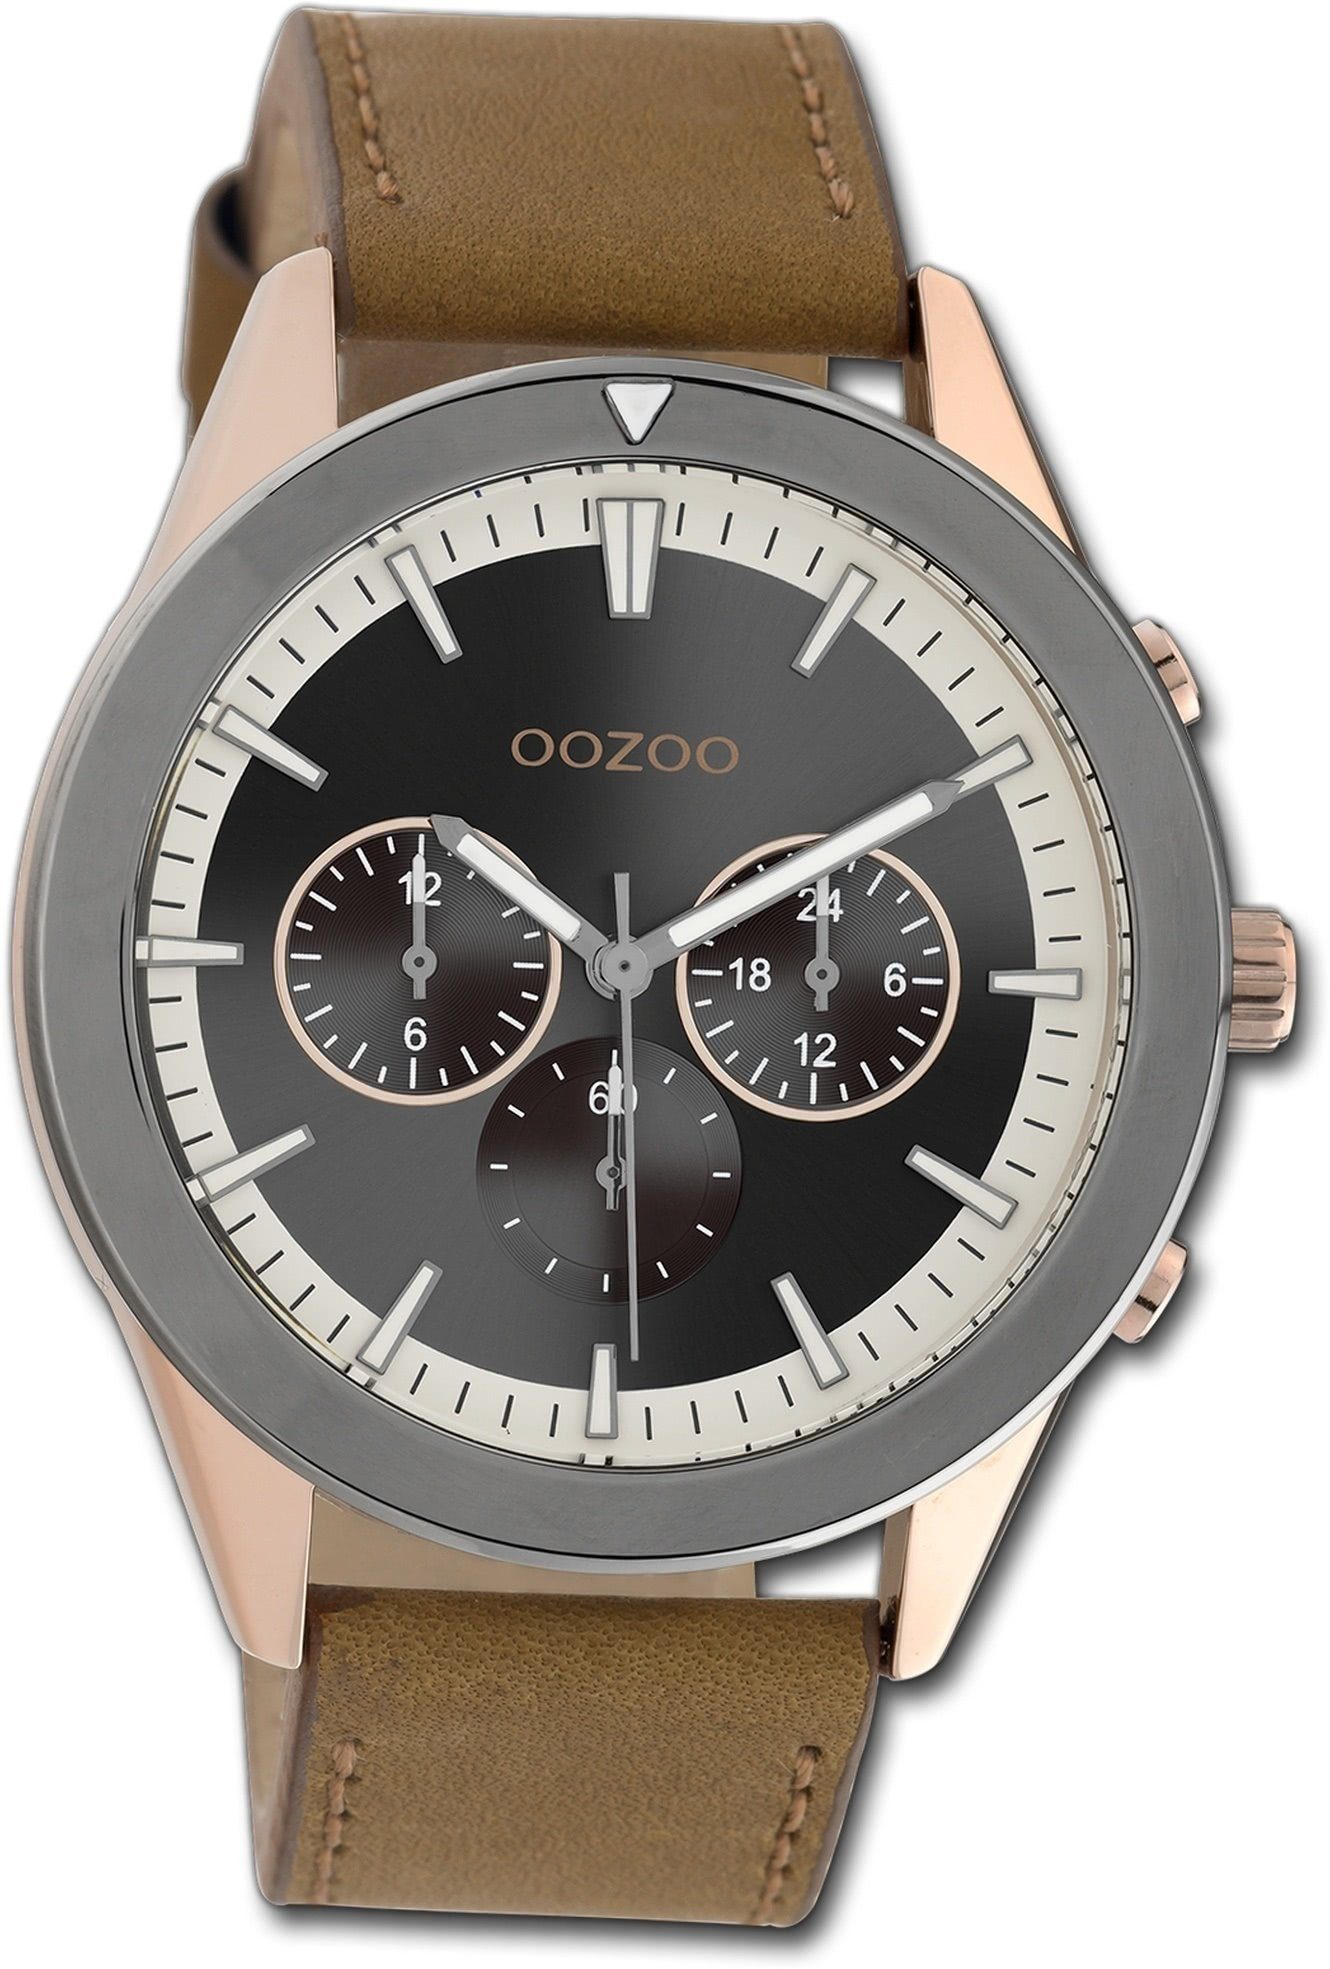 Gehäuse, (ca. OOZOO Lederarmband Herren Oozoo Armbanduhr Quarzuhr Timepieces, Herrenuhr groß 45mm) braun, rundes